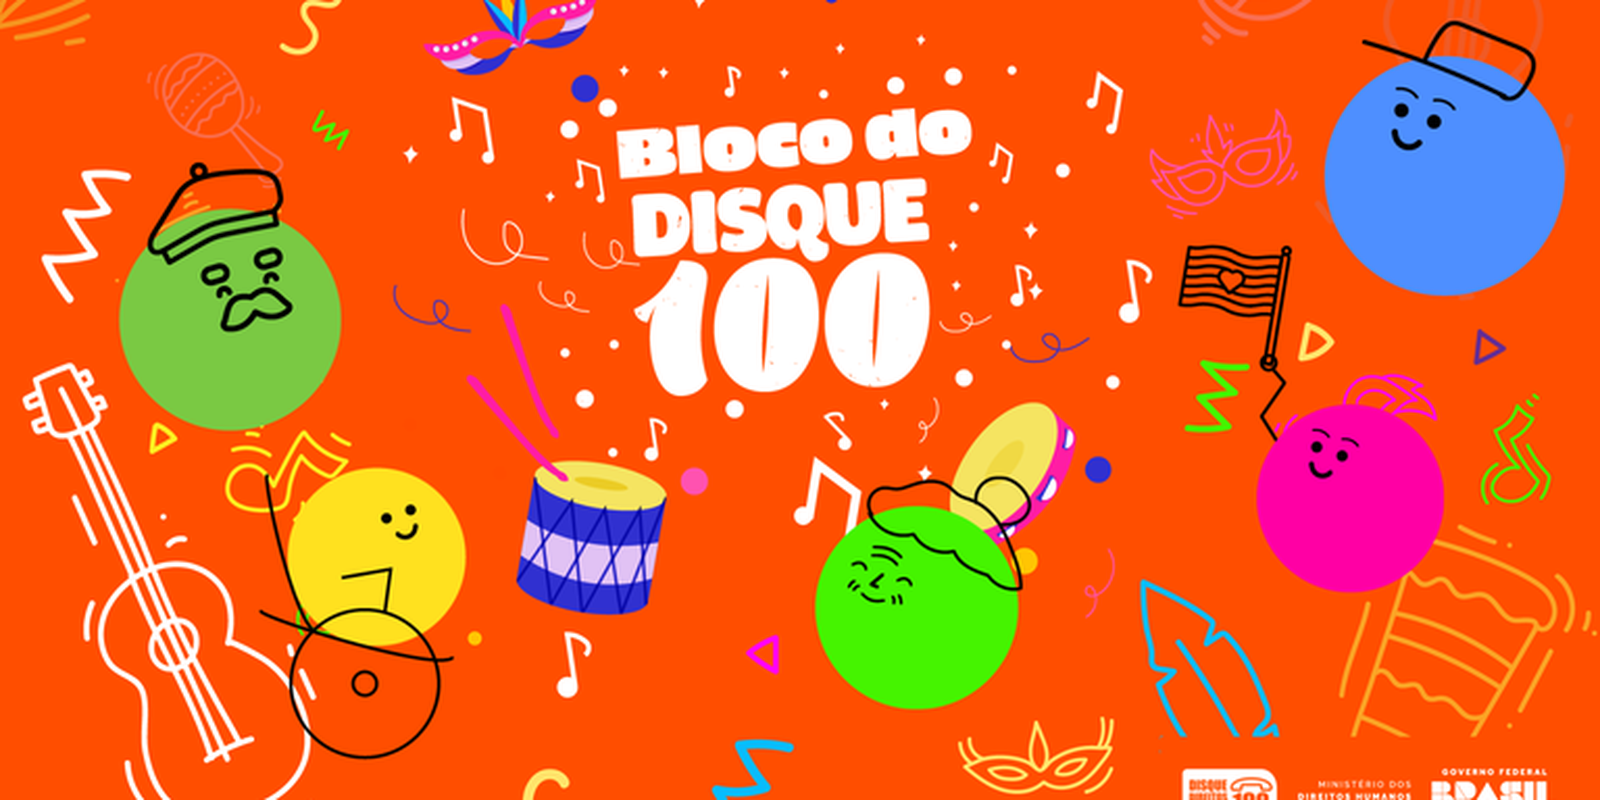 Bloco do Disque 100: canal vai receber denúncias no carnaval